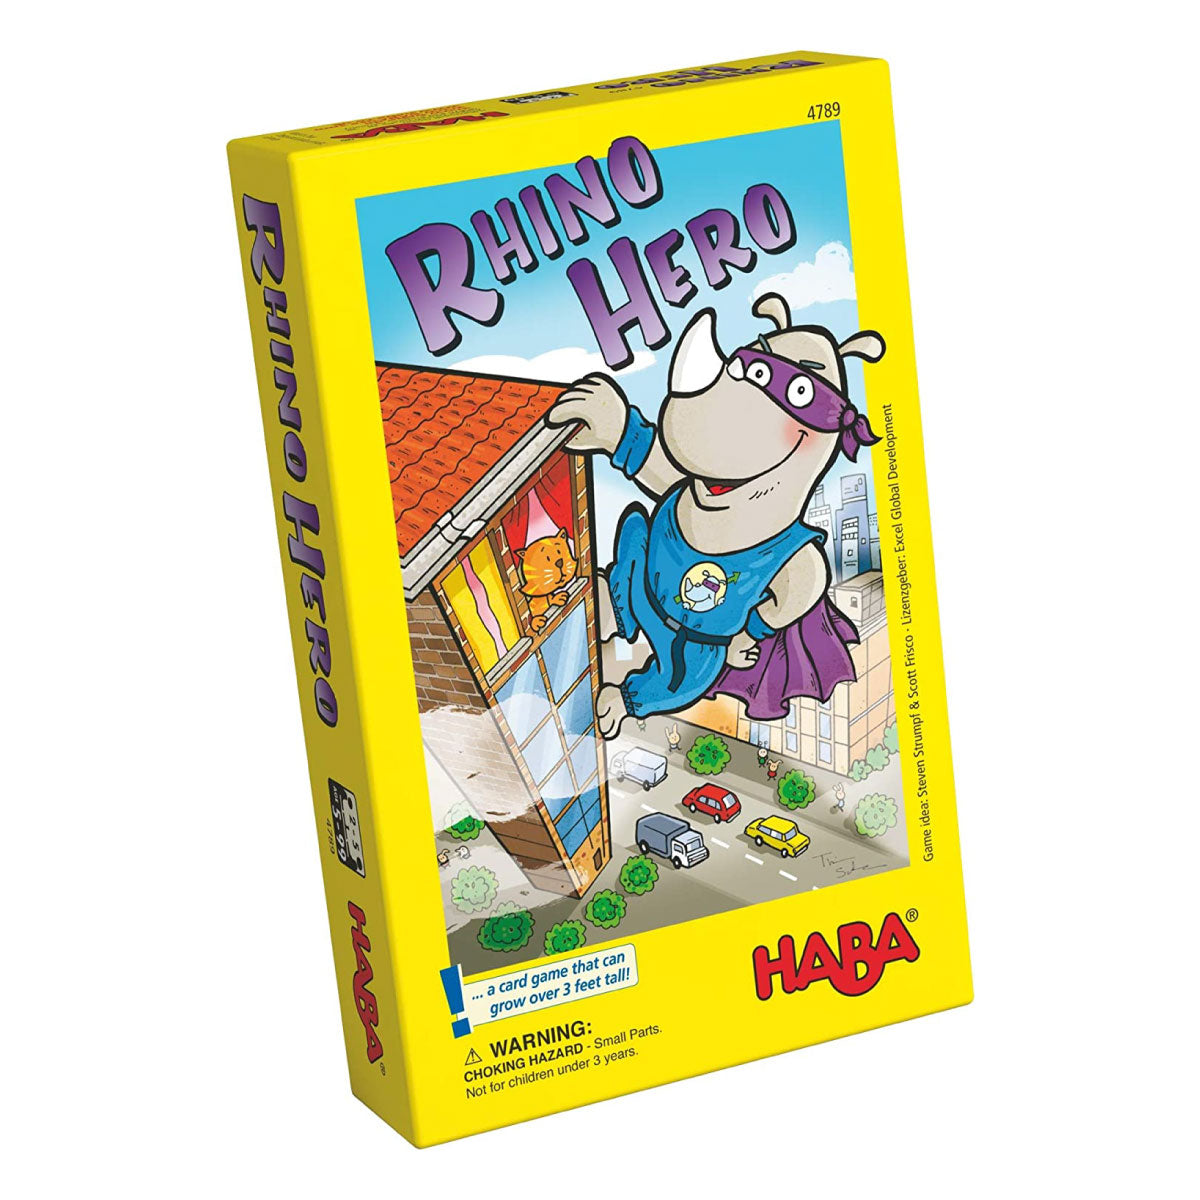 Rhino Hero Stacking Card Game from Haba